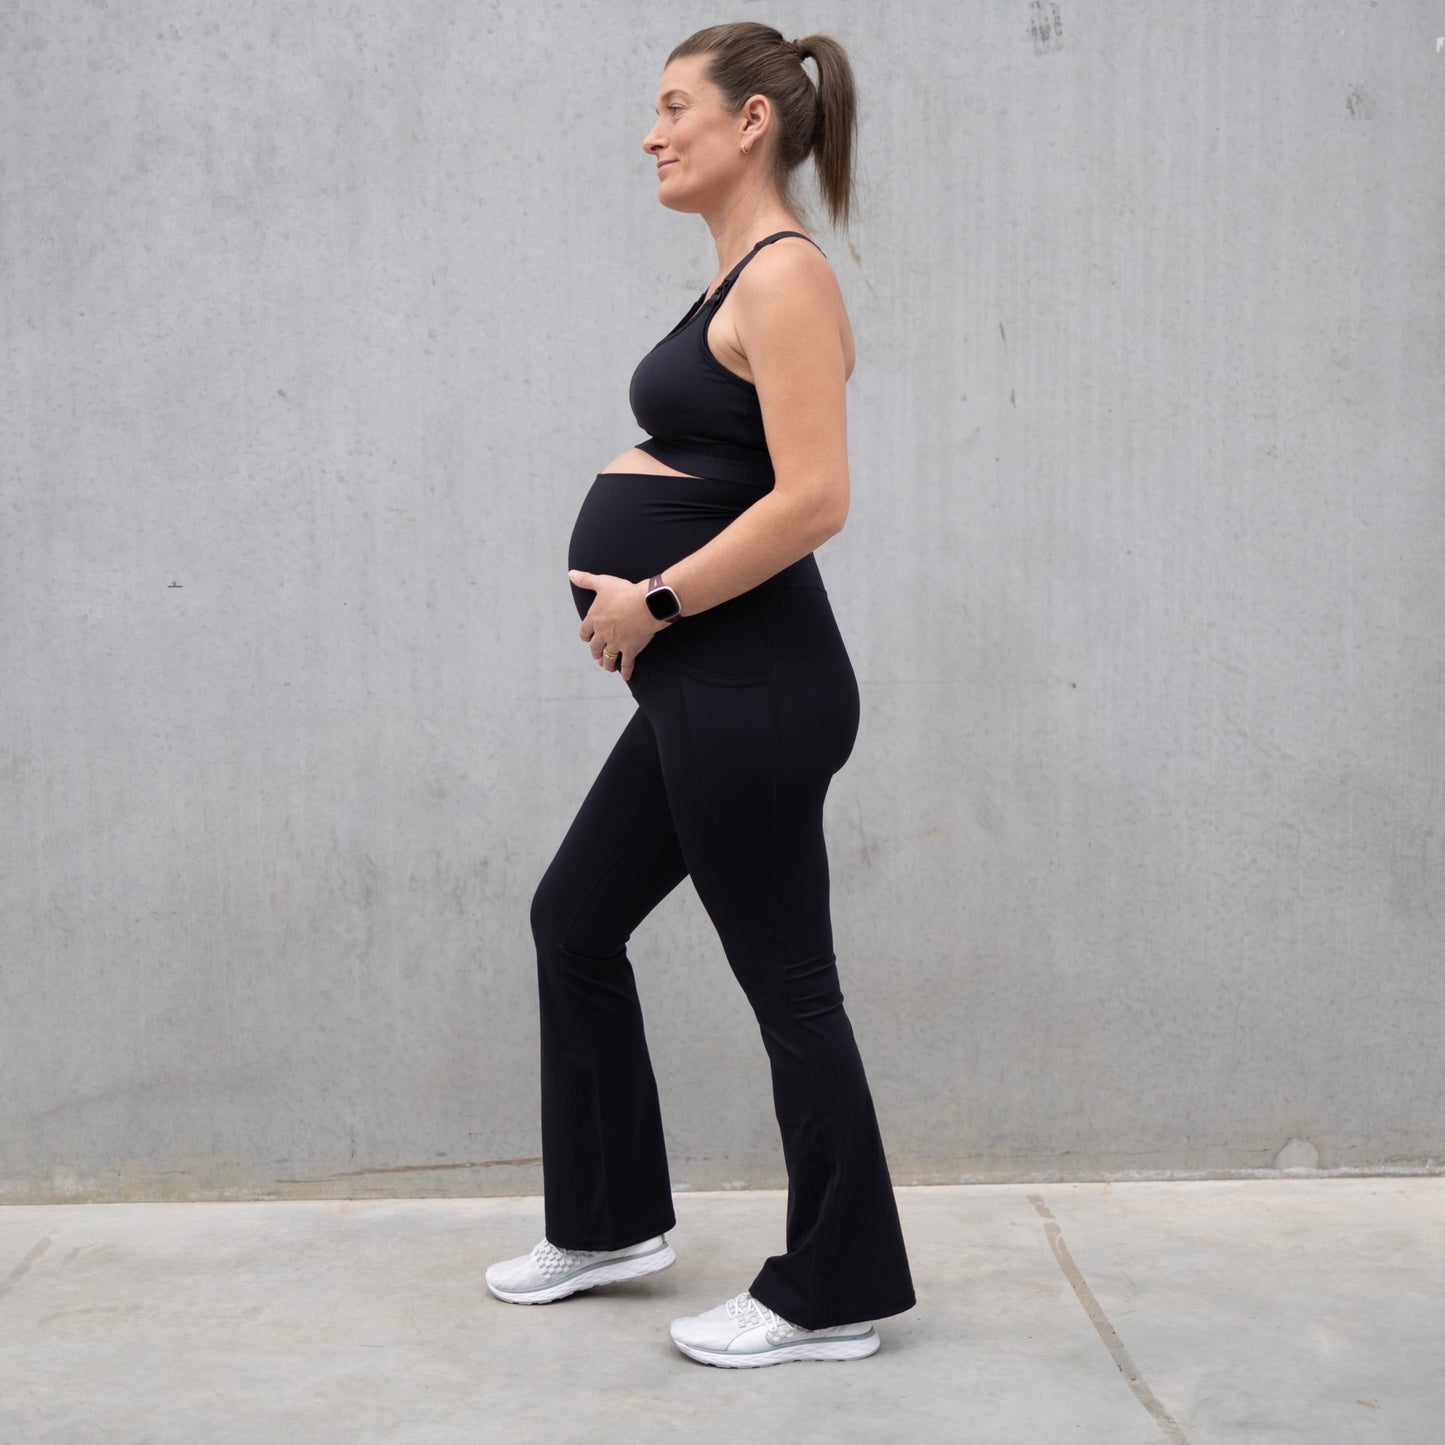 Emama Maternity Leggings Full Length + Pockets - Black flares - FINAL SALE ONLY